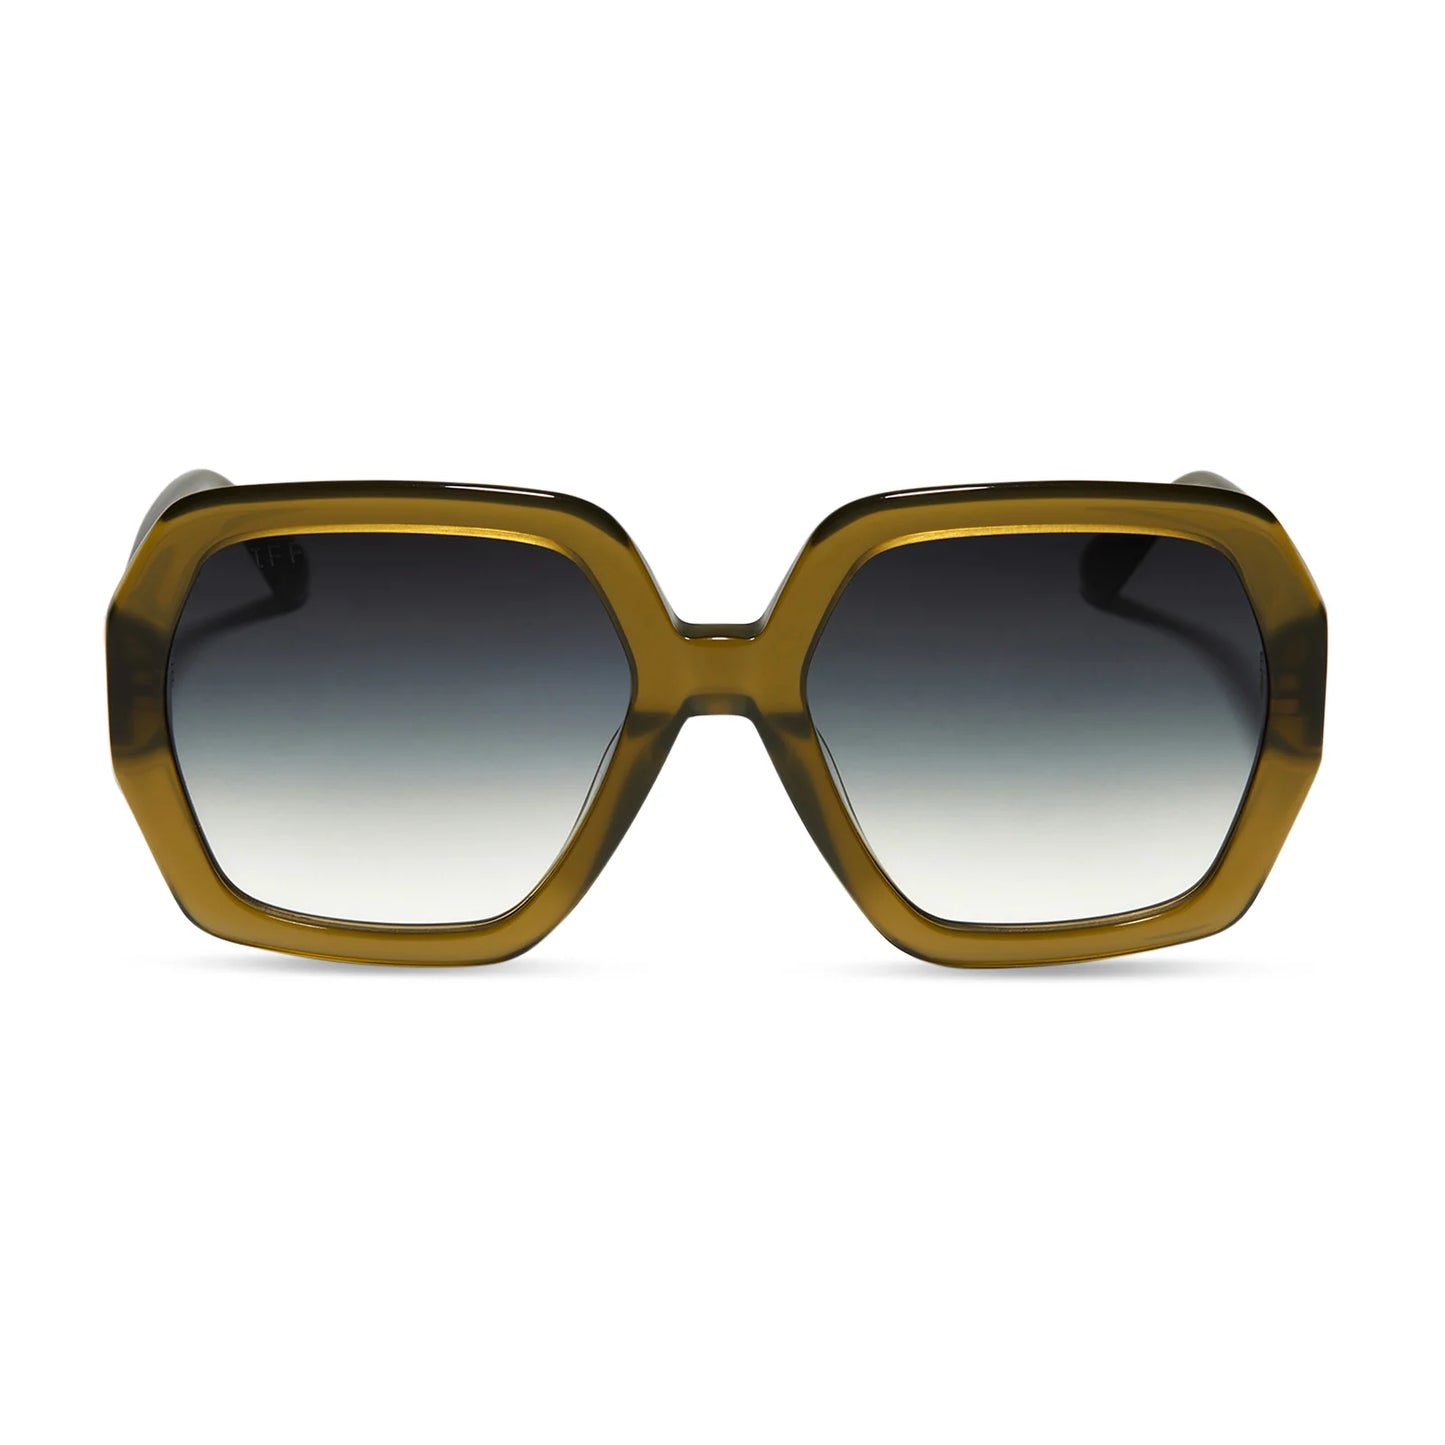 DIFF Eyewear - Nola - Rich Olive Grey Gradient Sunglasses